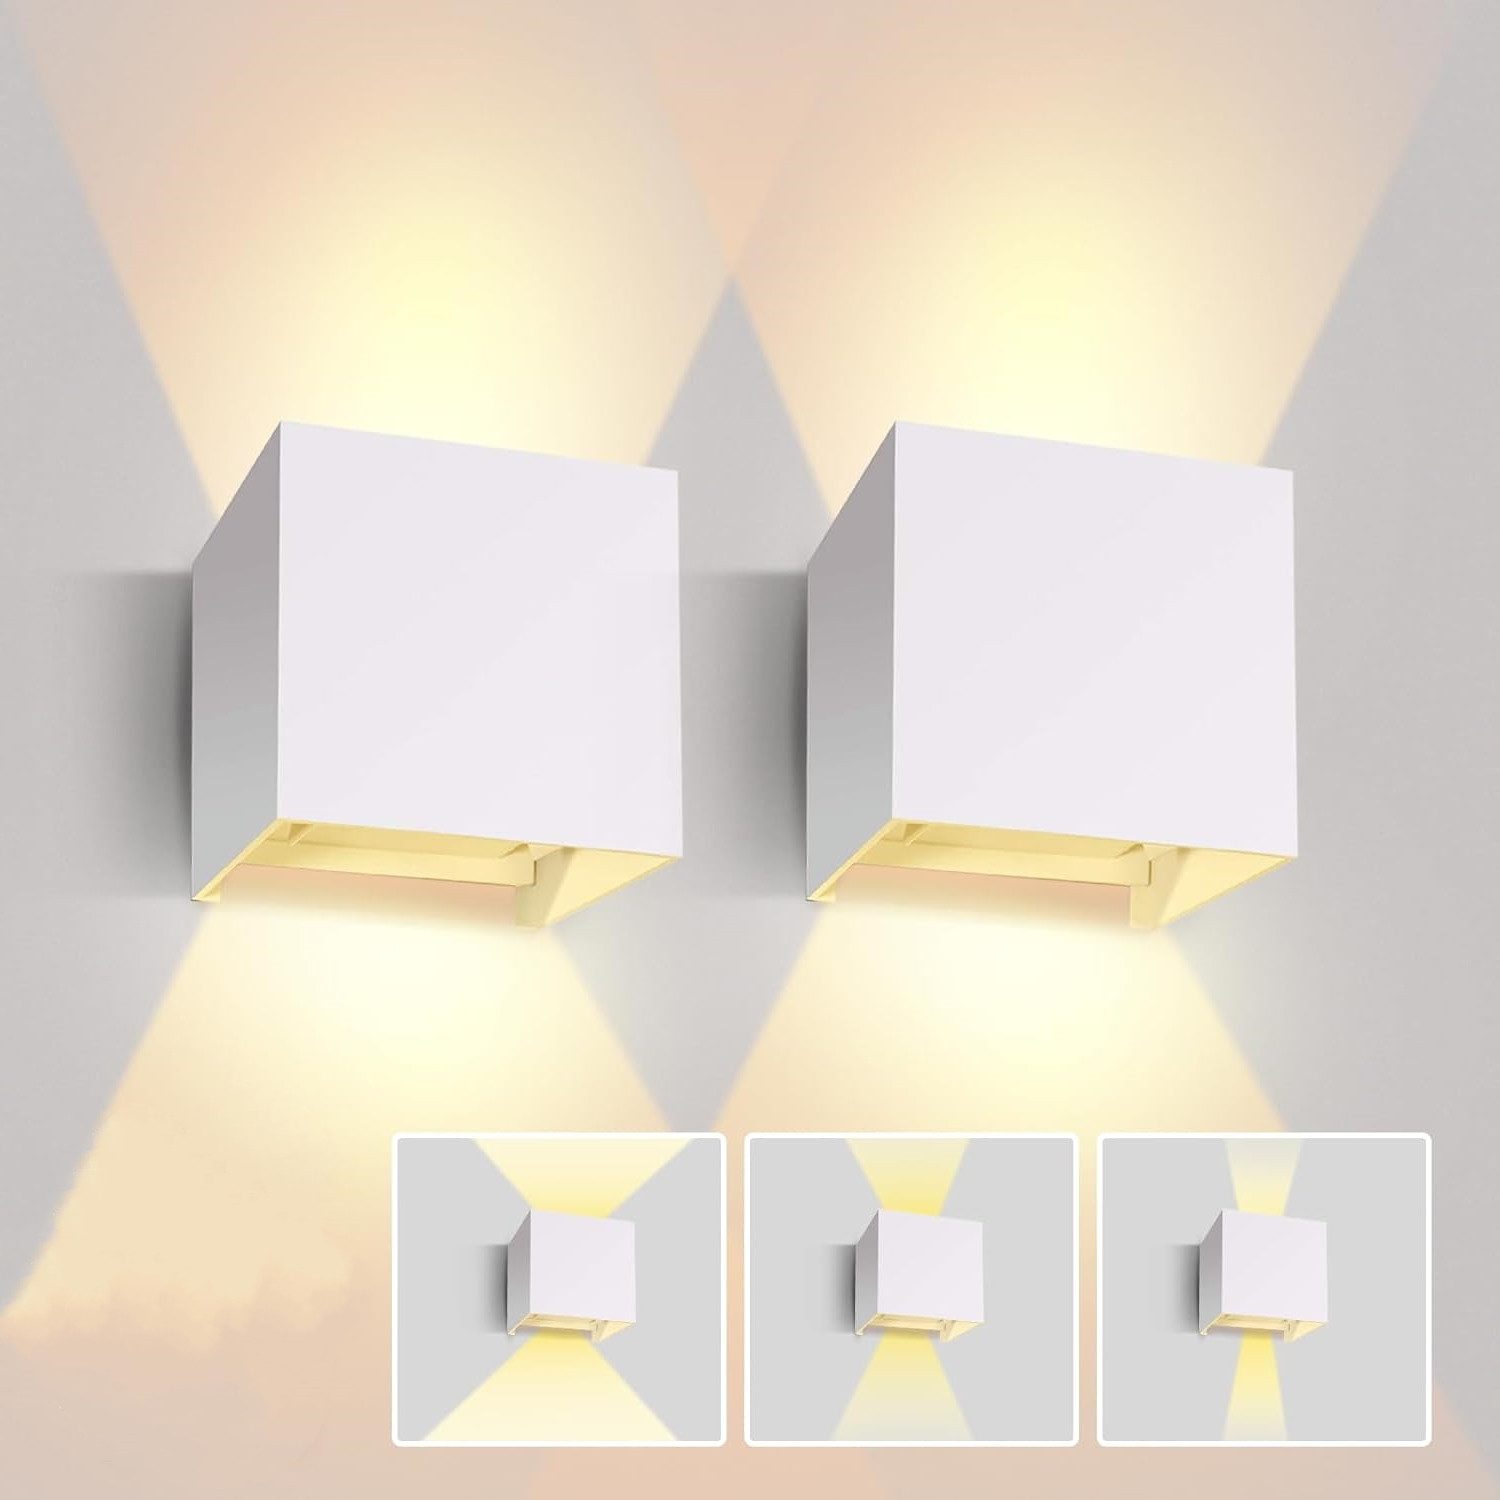 OULENBIYAR Wandleuchte 2 Stück LED Wandlampe Auf & ab Wandspot 10x10x5cm Aluminium-Druckguss, LED fest integriert, Warmweiß, Einstellbarer Lichtstrahl mit Bewegungsmelder, für Wohnzimmer, Flur